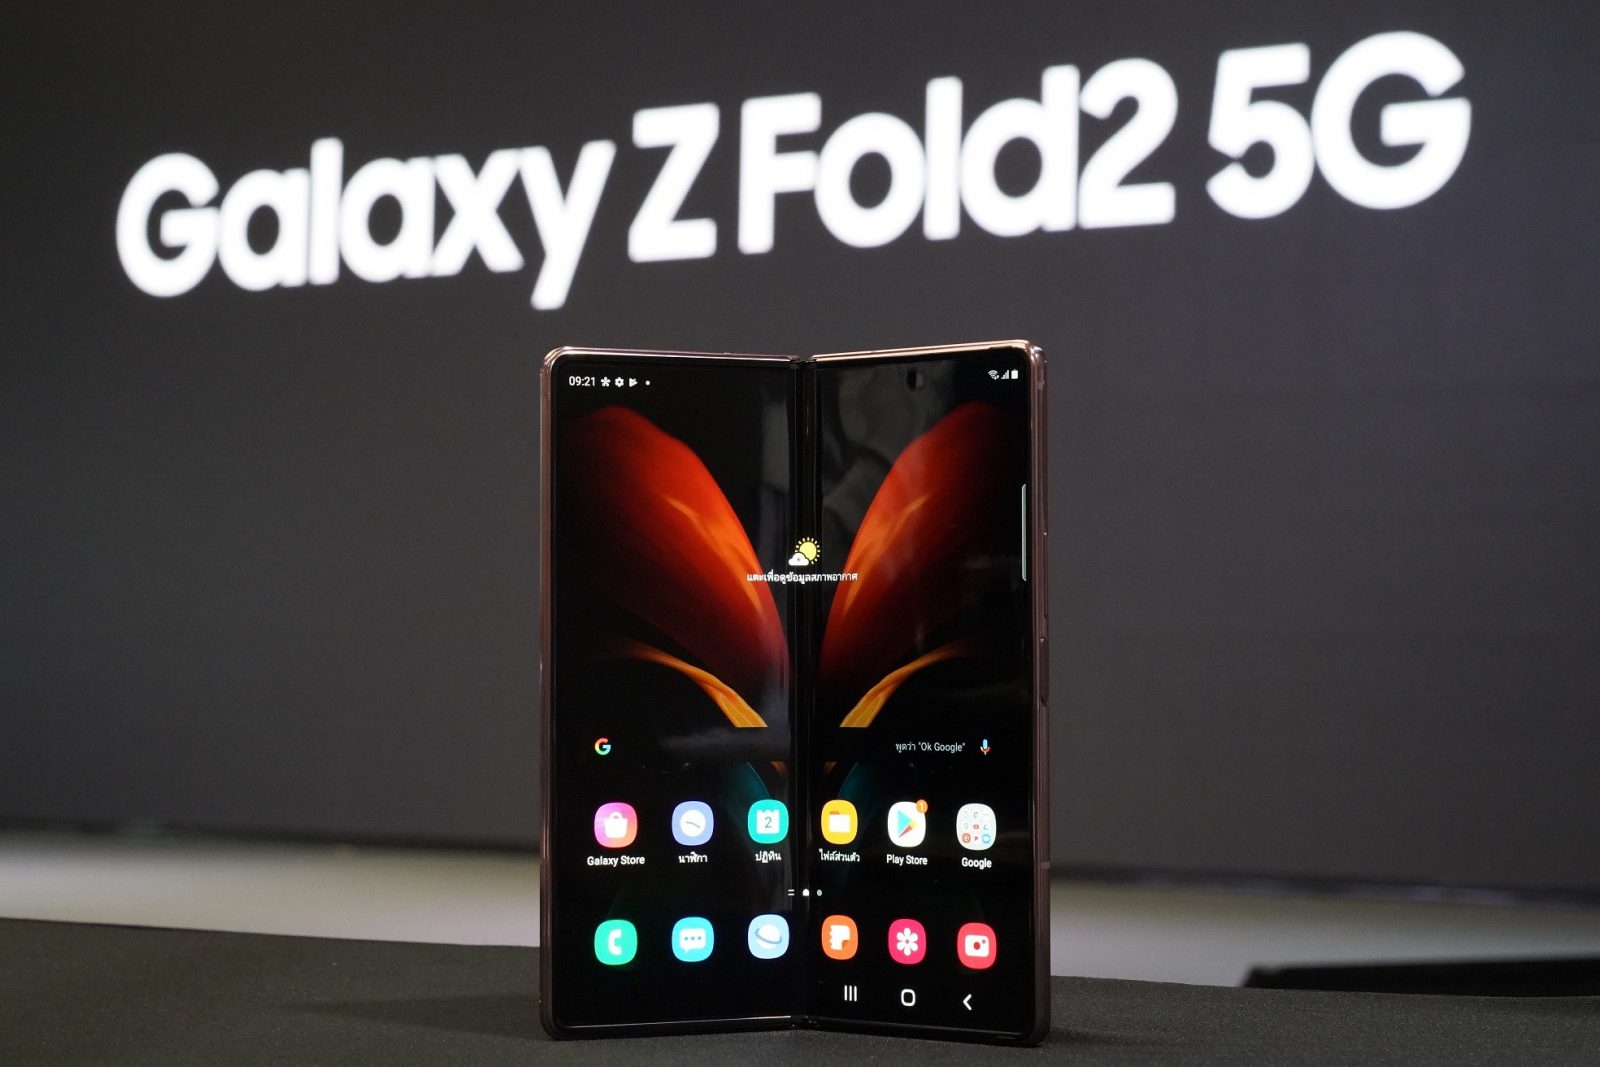 Galaxy Z Fold2 5G 01. | galaxy z fold 2 | Samsung ไทยเปิดจอง ‘Galaxy Z Fold 2 5G’ กลุ่มแรกของโลก สุดยอดนวัตกรรมสมาร์ทโฟนแห่งยุค